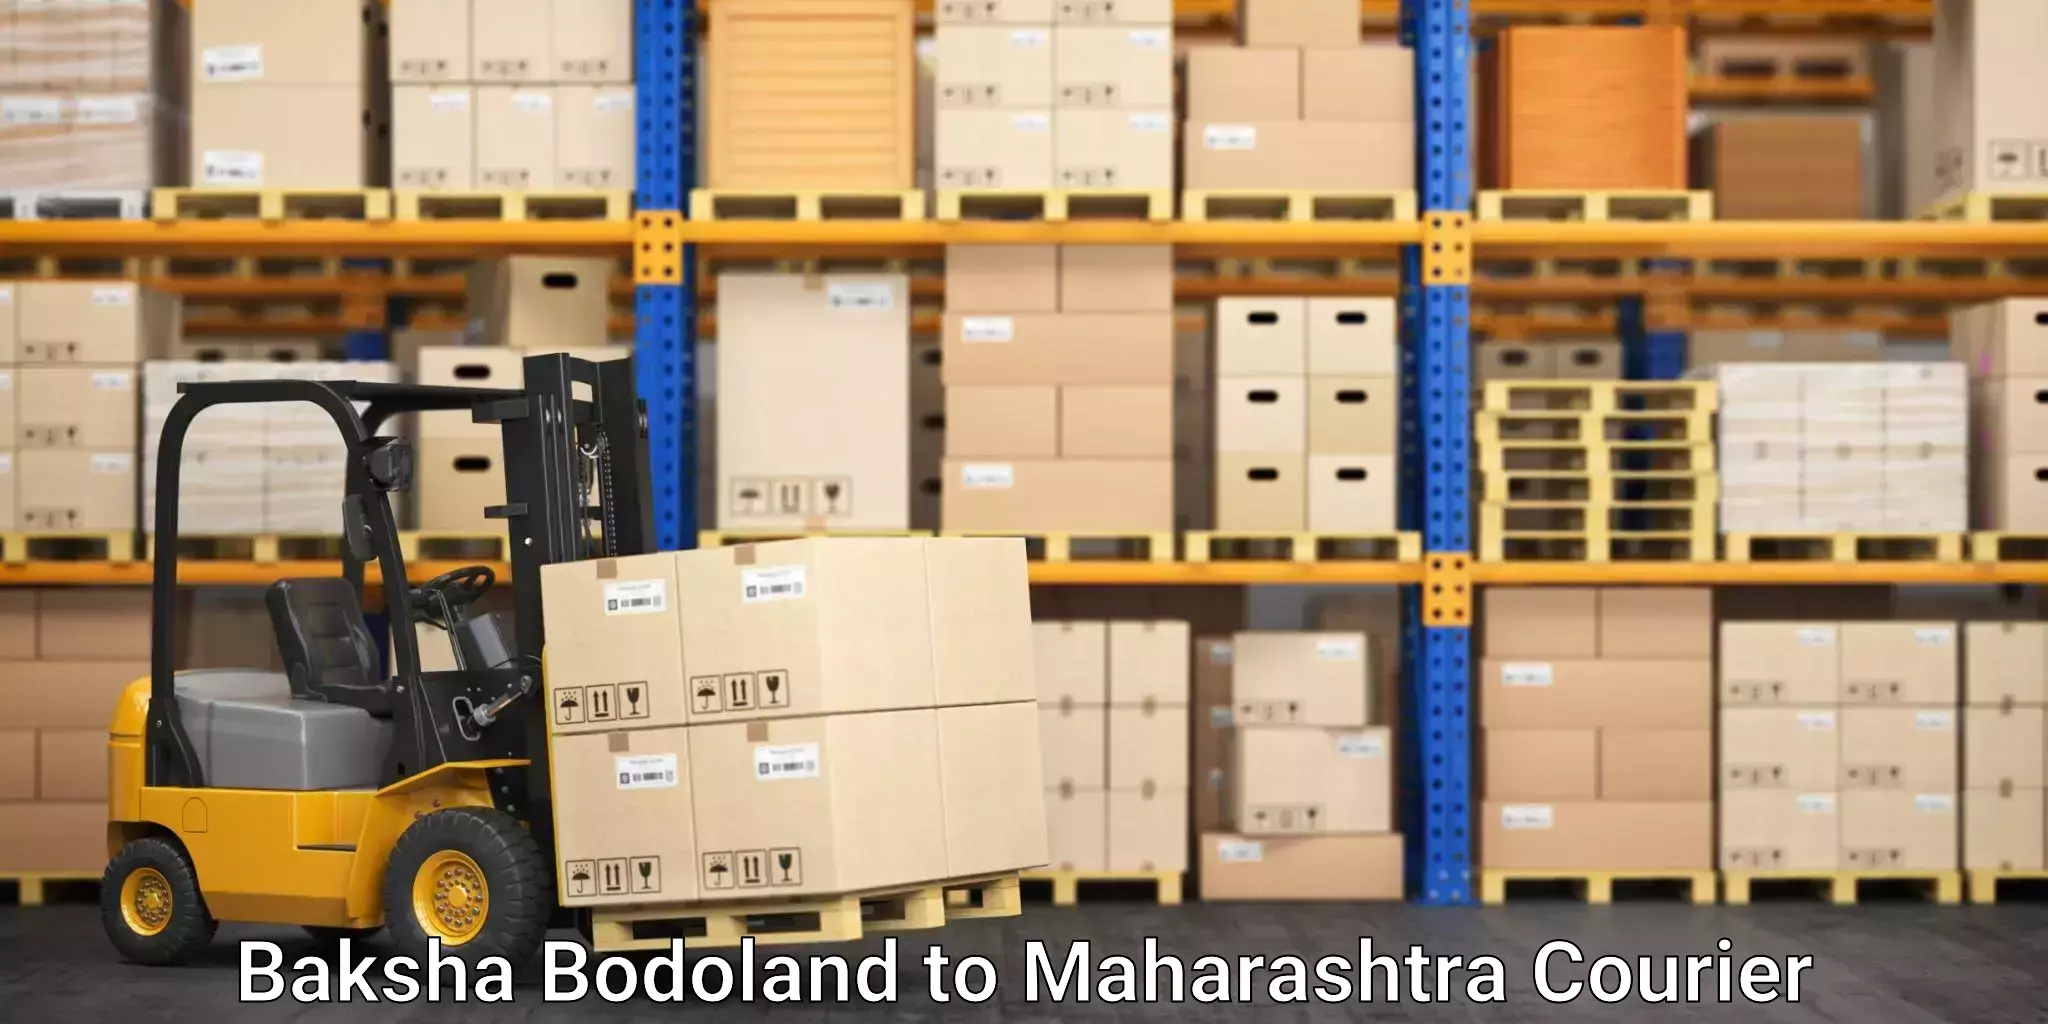 Reliable delivery network Baksha Bodoland to Nashik